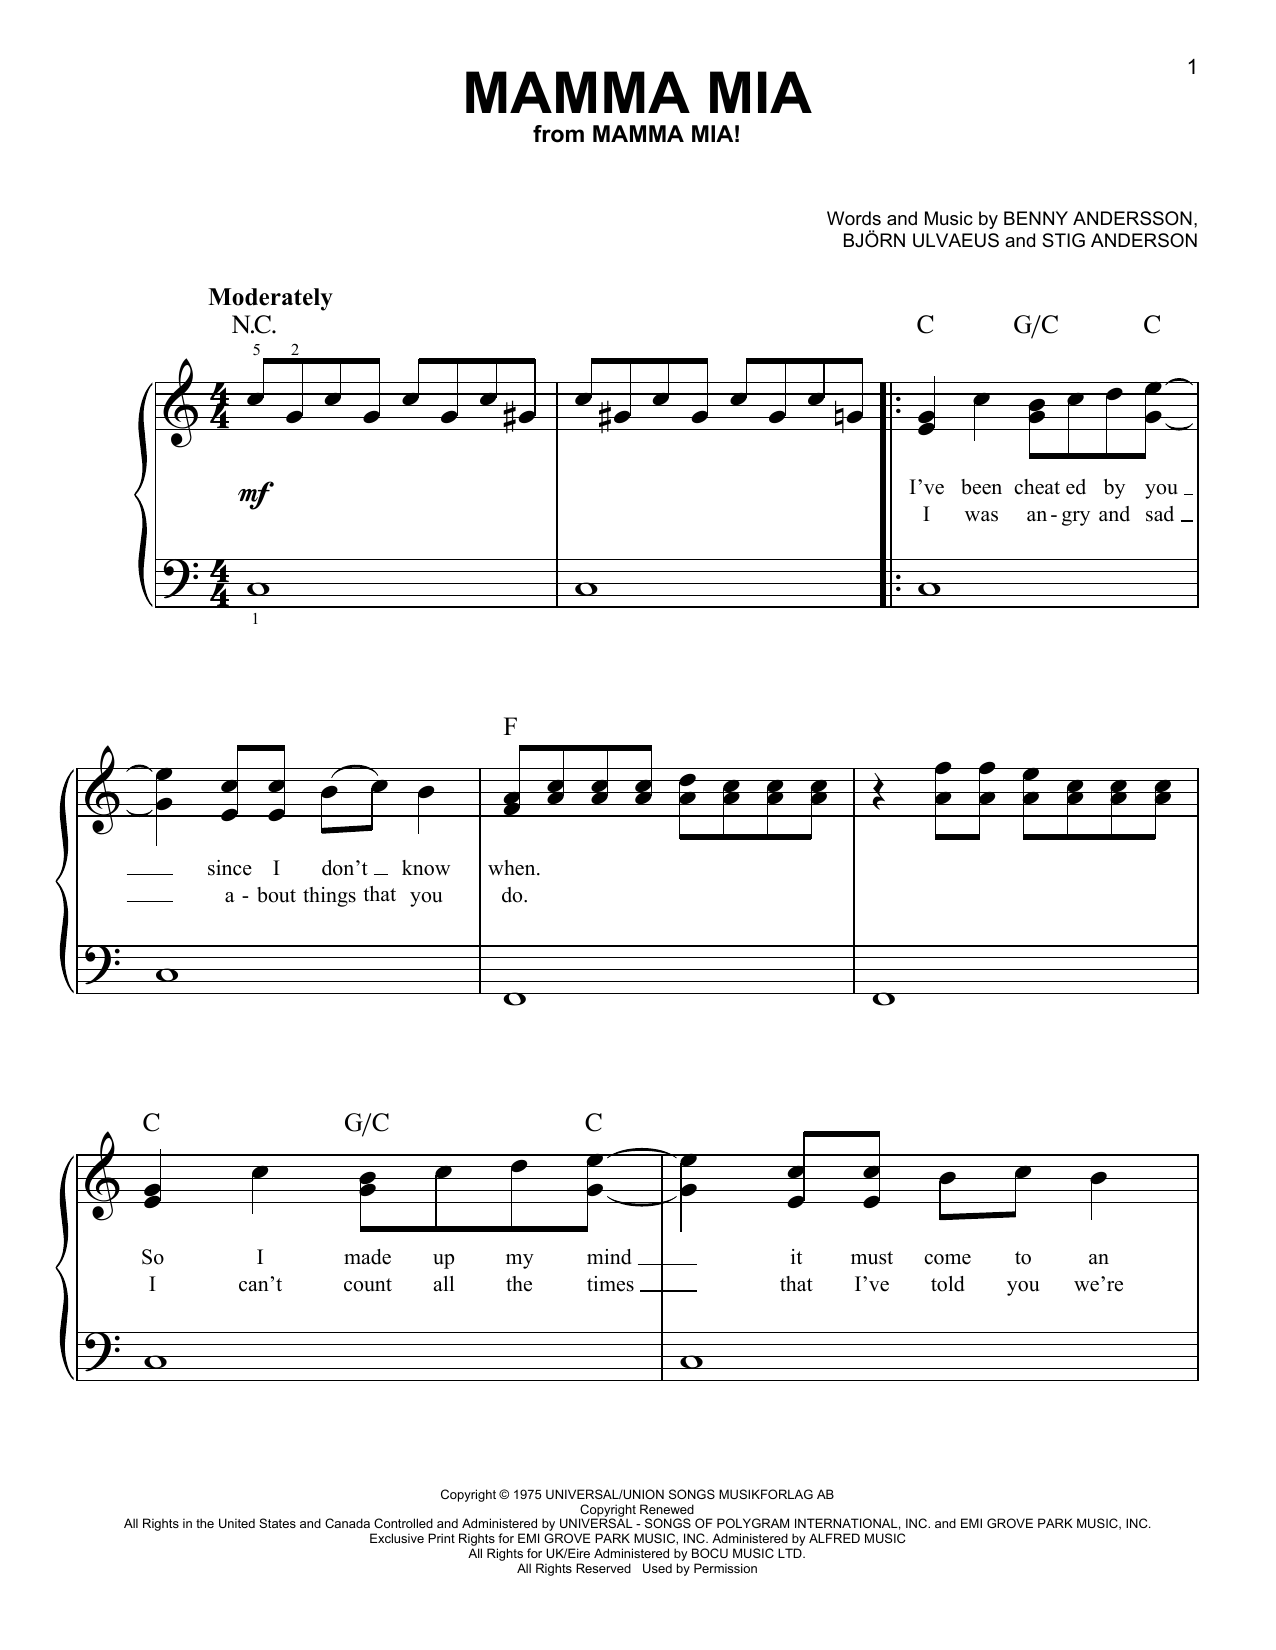 ABBA Mamma Mia (from the musical Mamma Mia!) Sheet Music